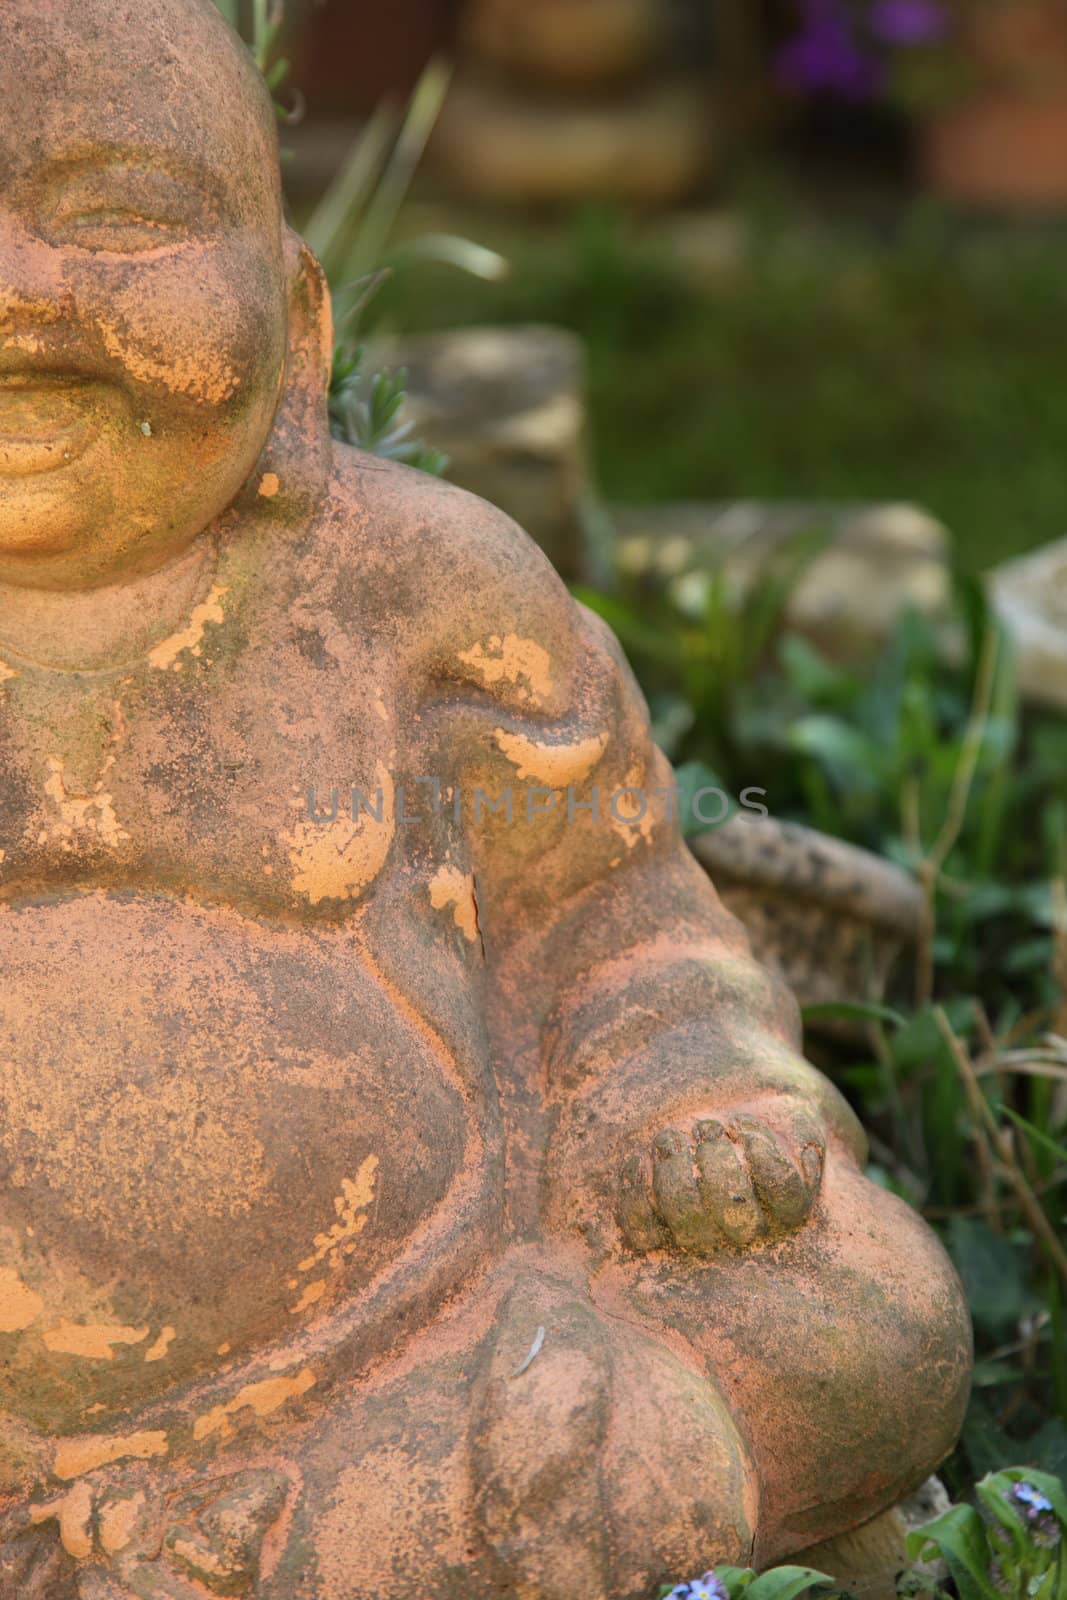 Smiling Buddha figurine by Farina6000